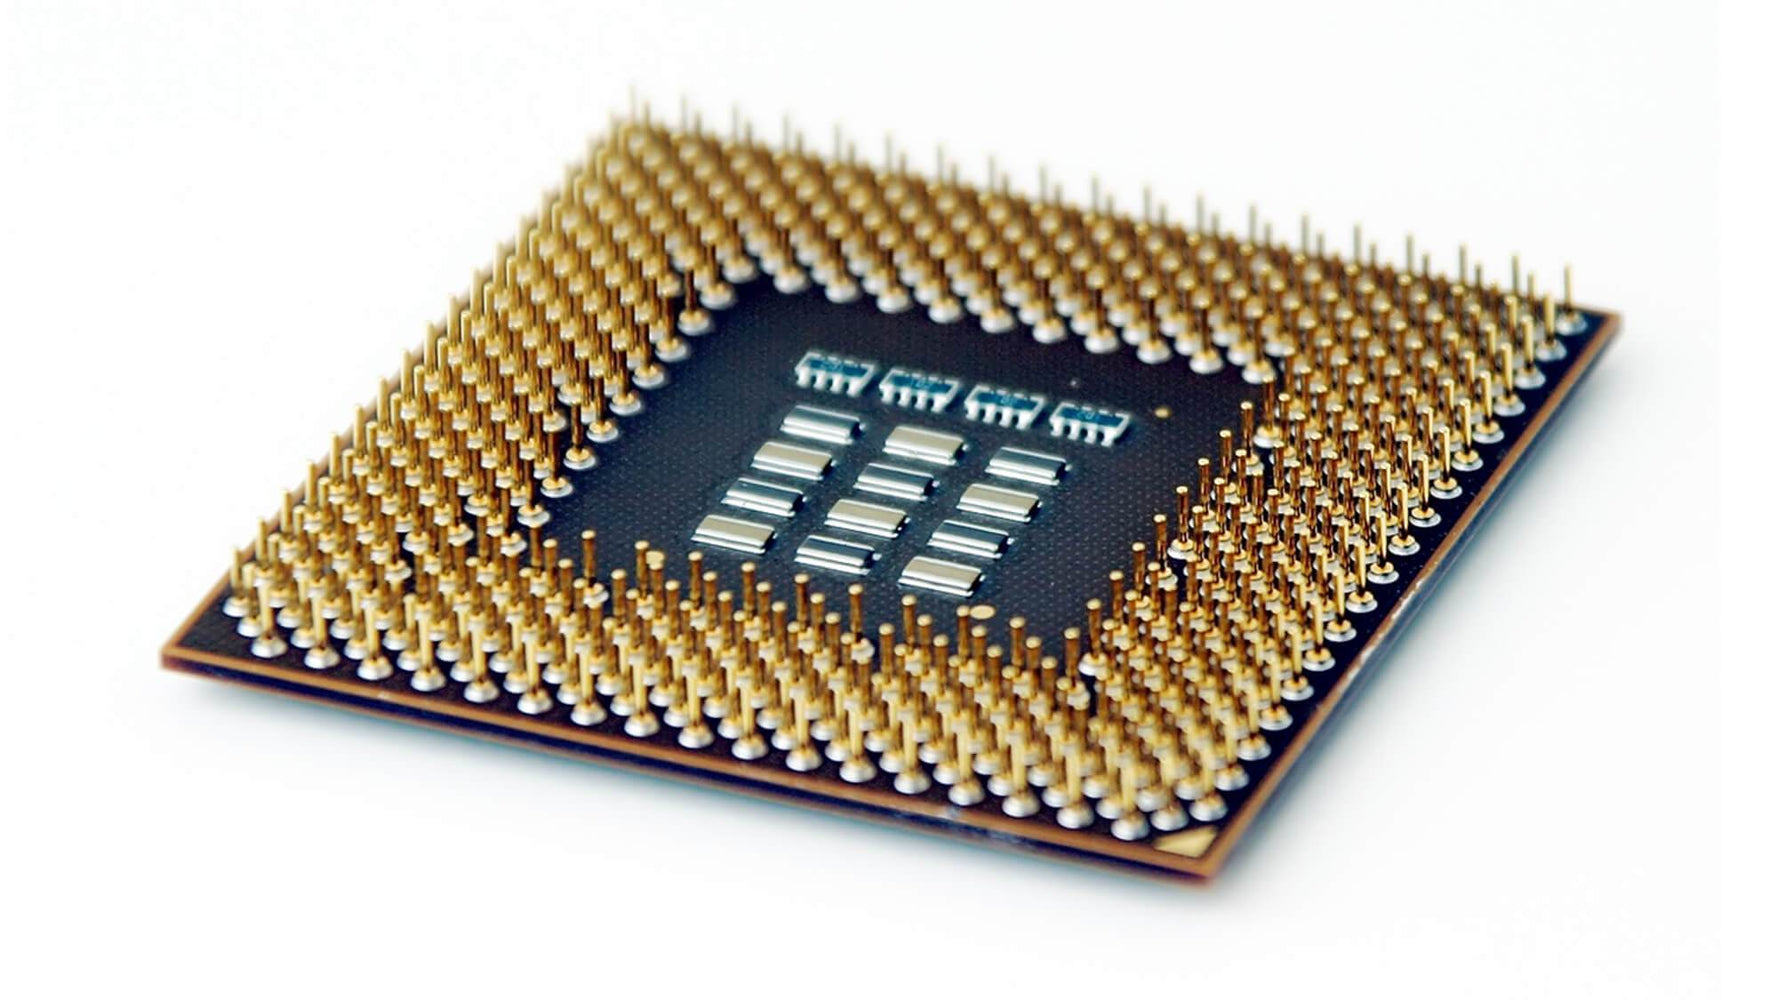 766378-B21 - HP Intel Xeon E5-2650lv3 12-Core 1.8GHz 30MB Smart Cache 9.6GT/s QPI Socket FCLGA2011-3 22nm 65w Processor